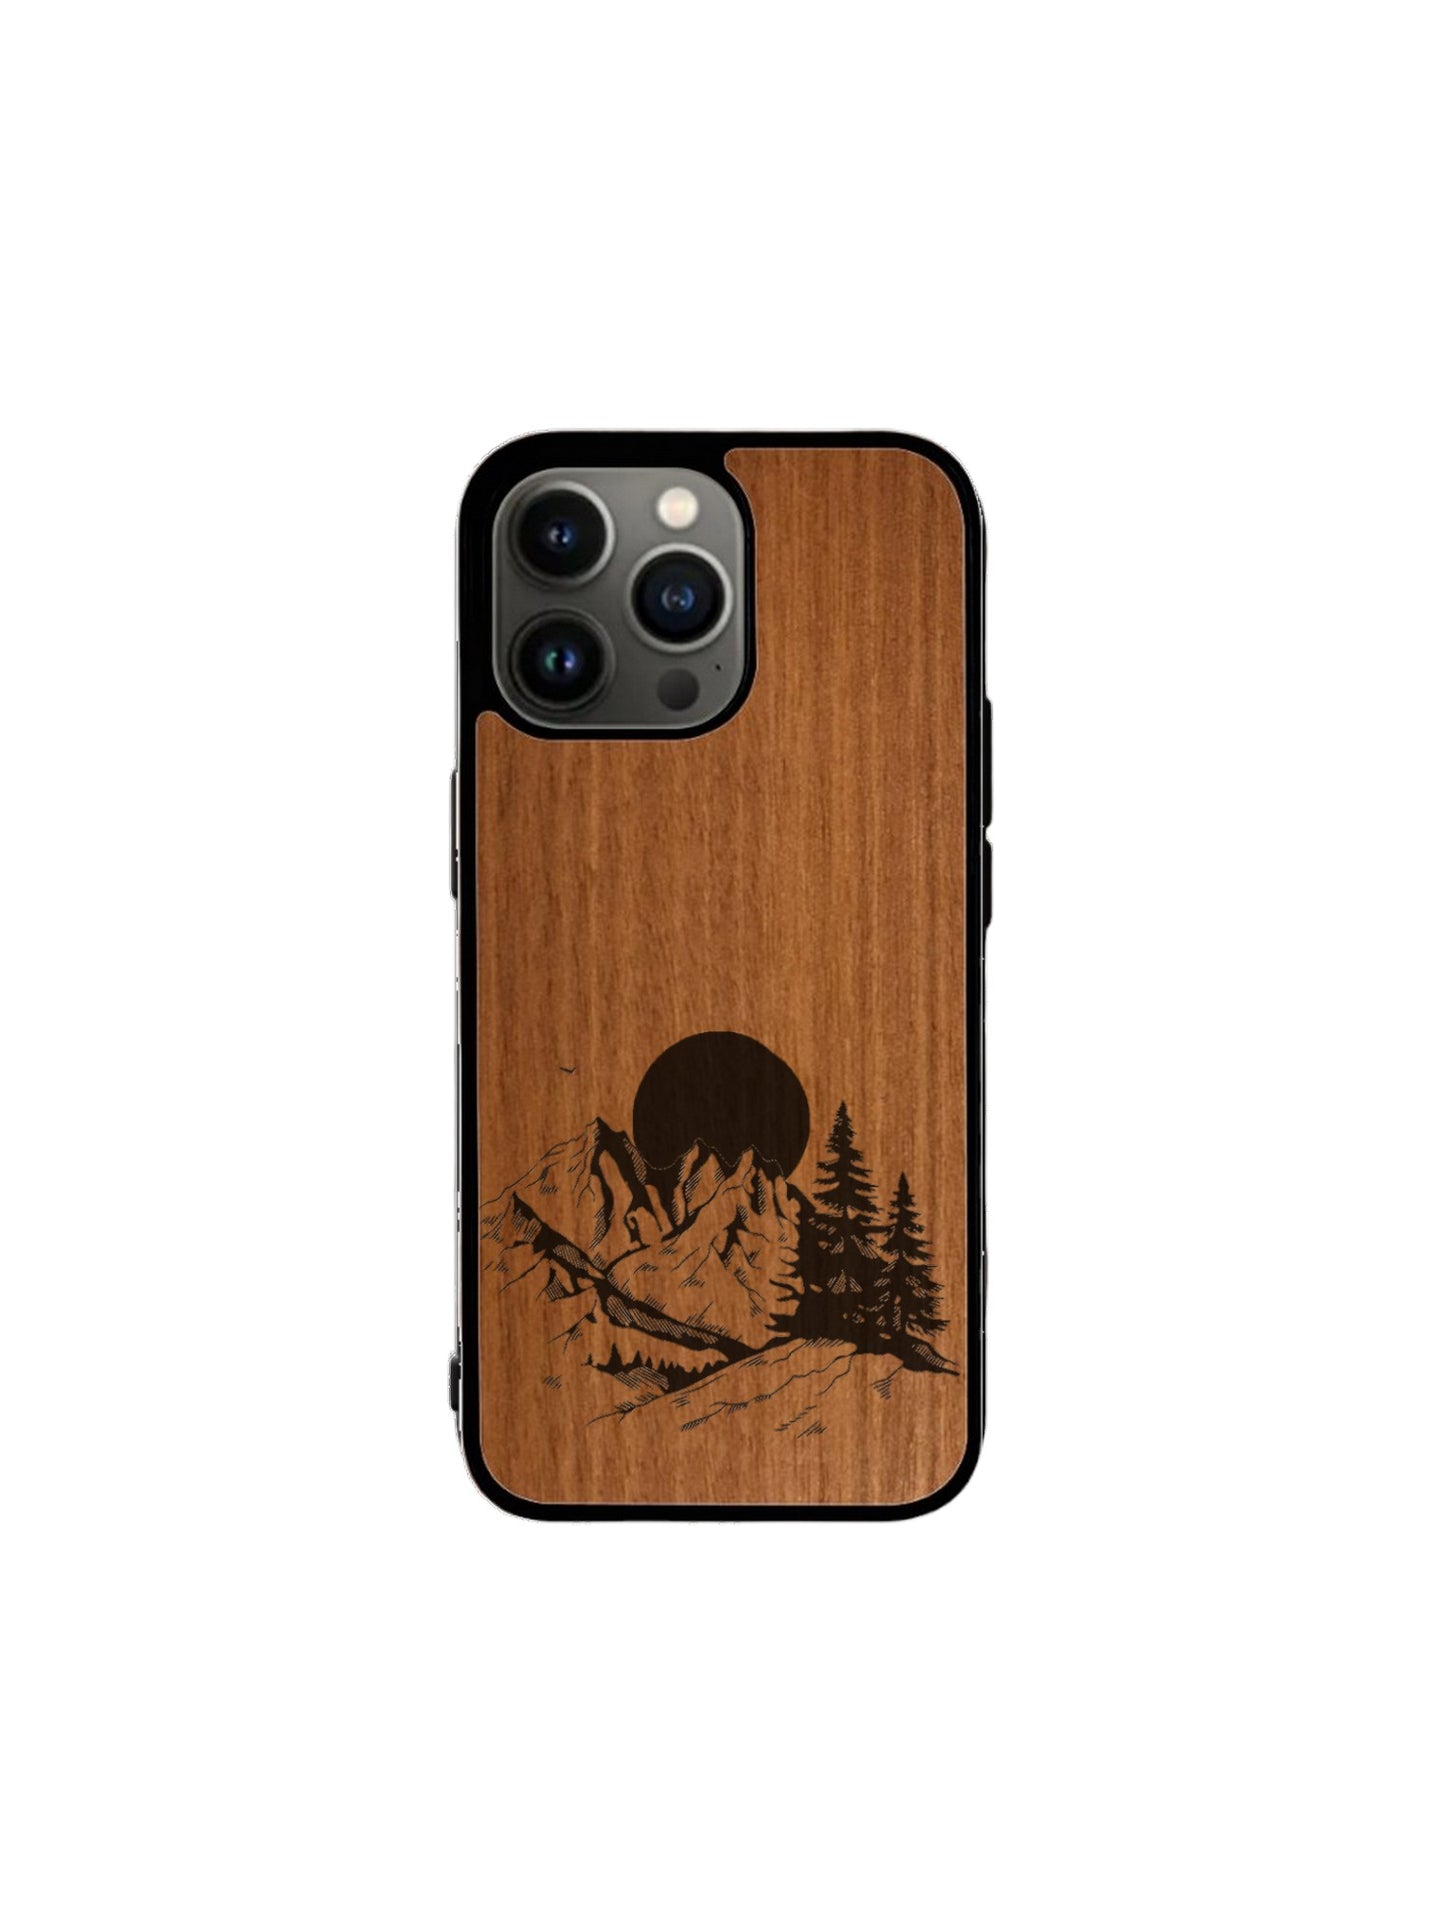 Iphone case - Mountain landscape